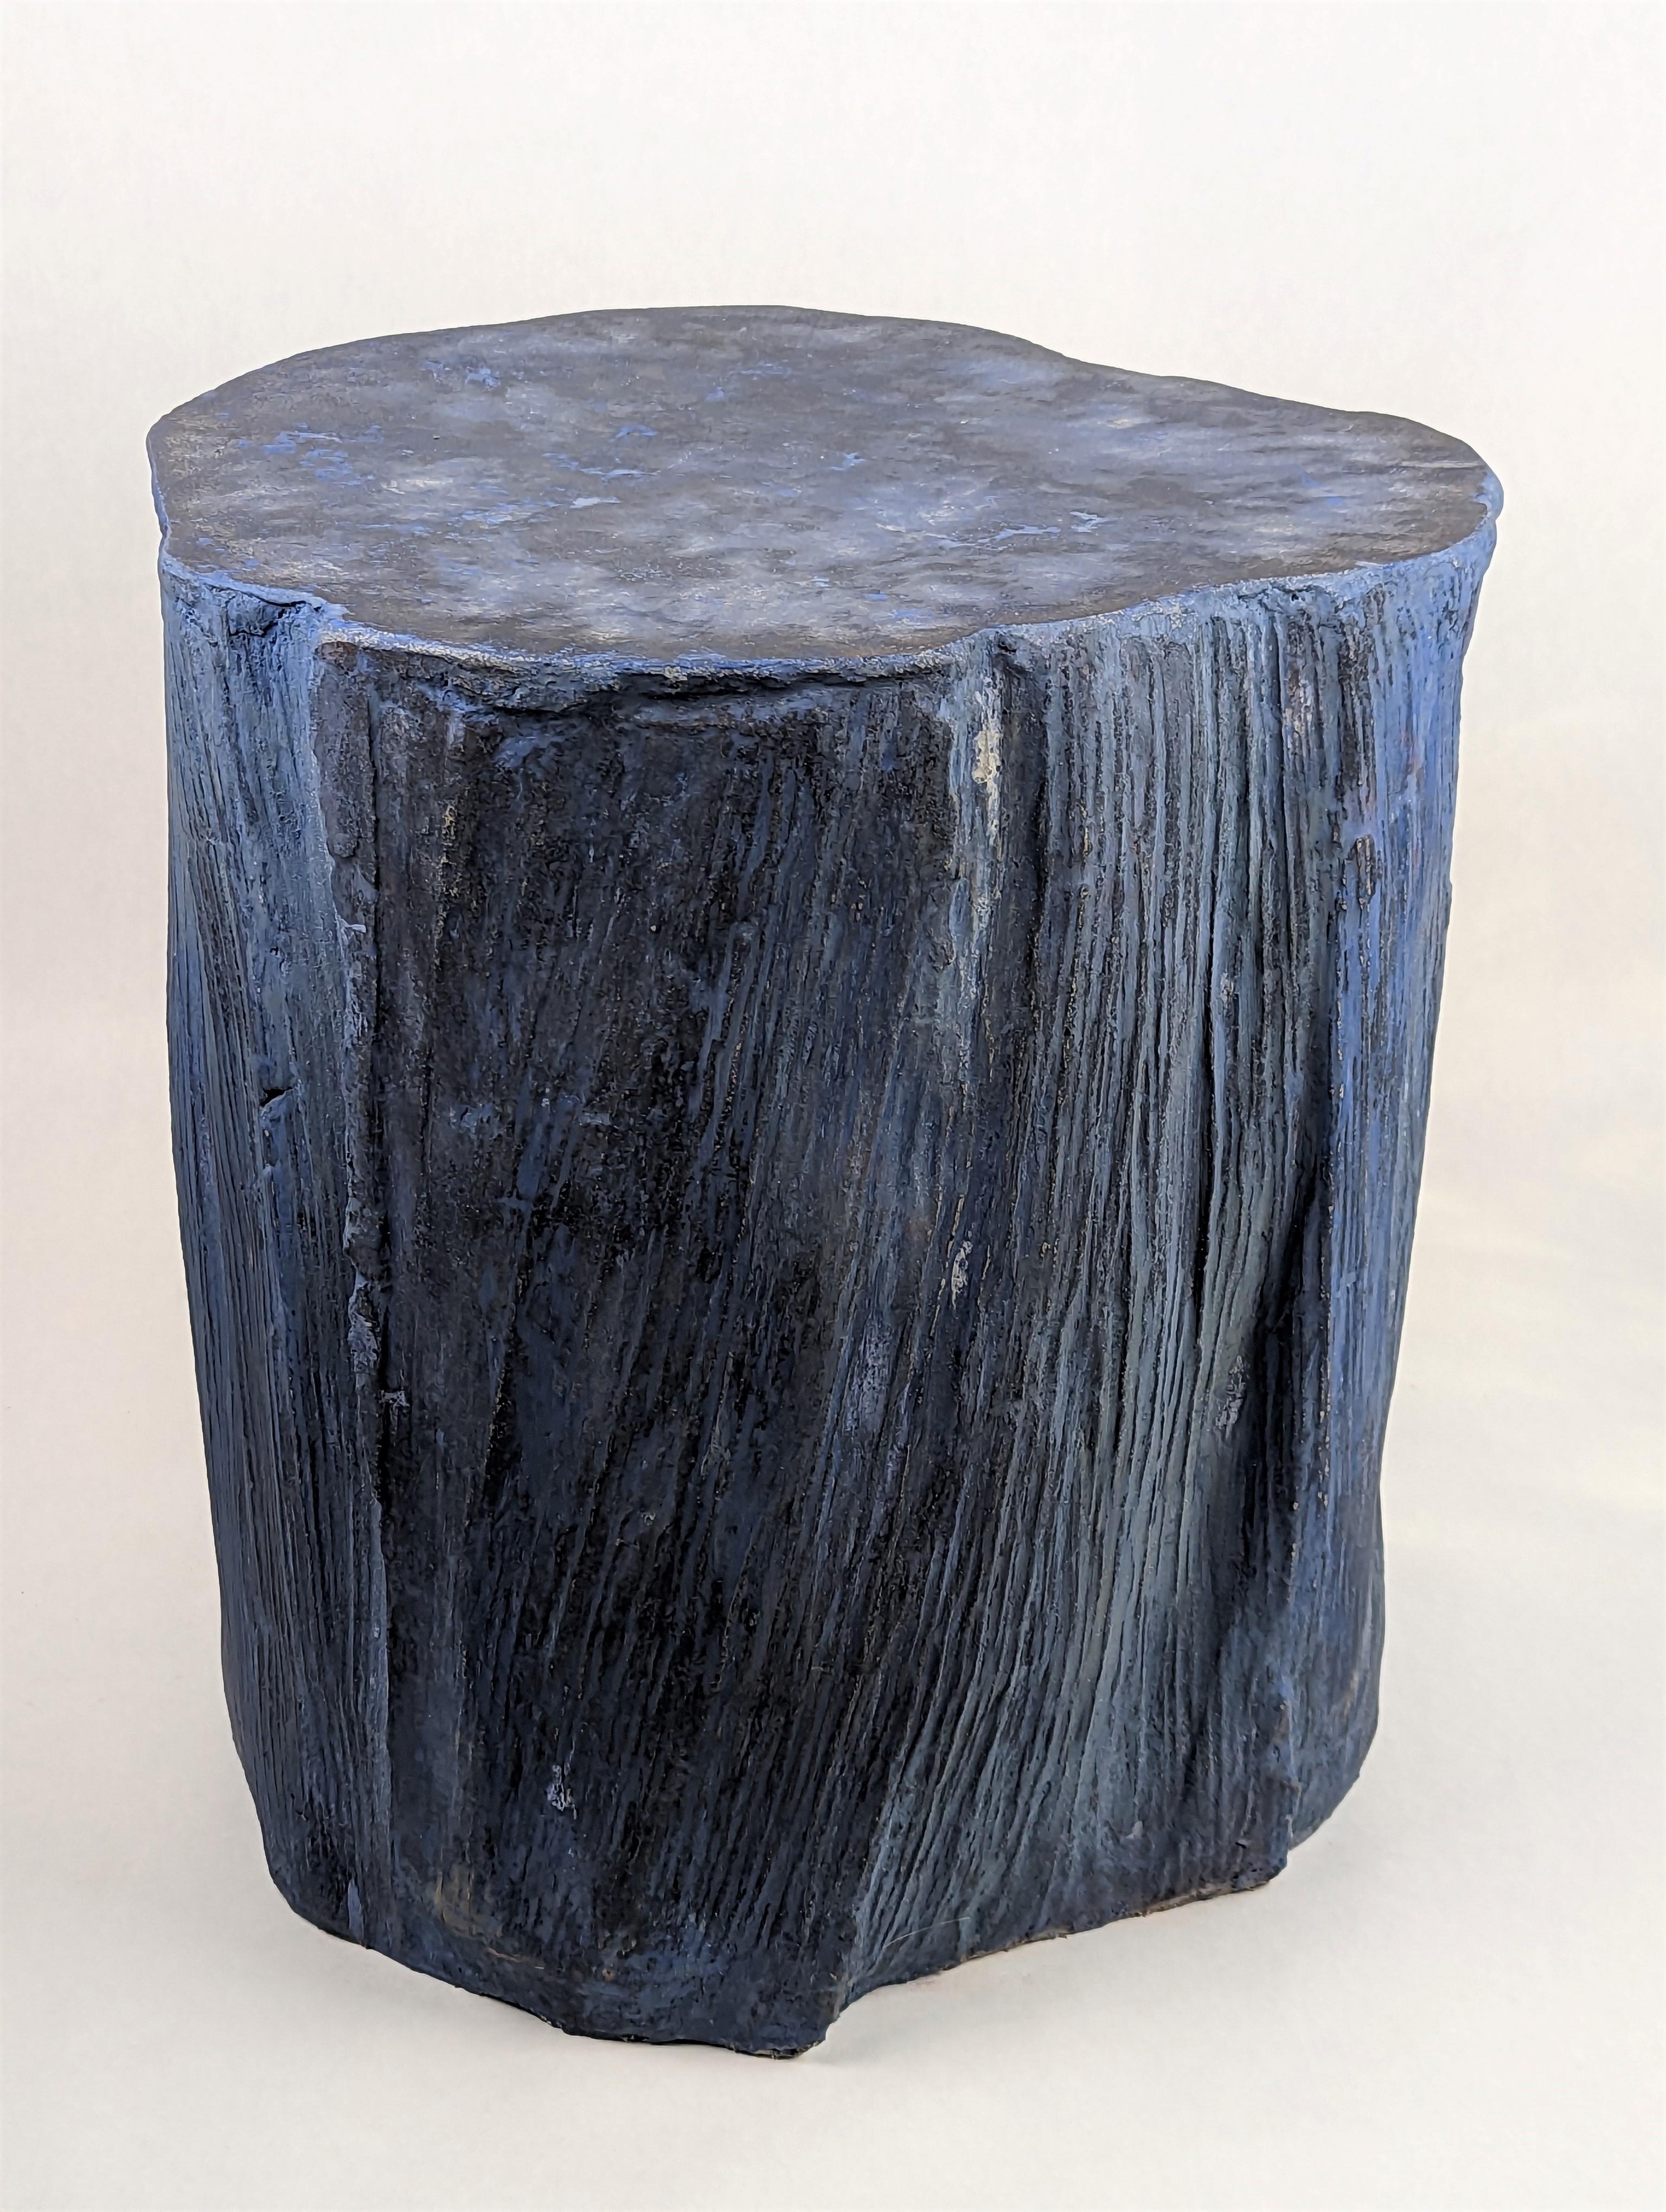 American Organic Modern Concrete Palm Stump Side Table For Sale